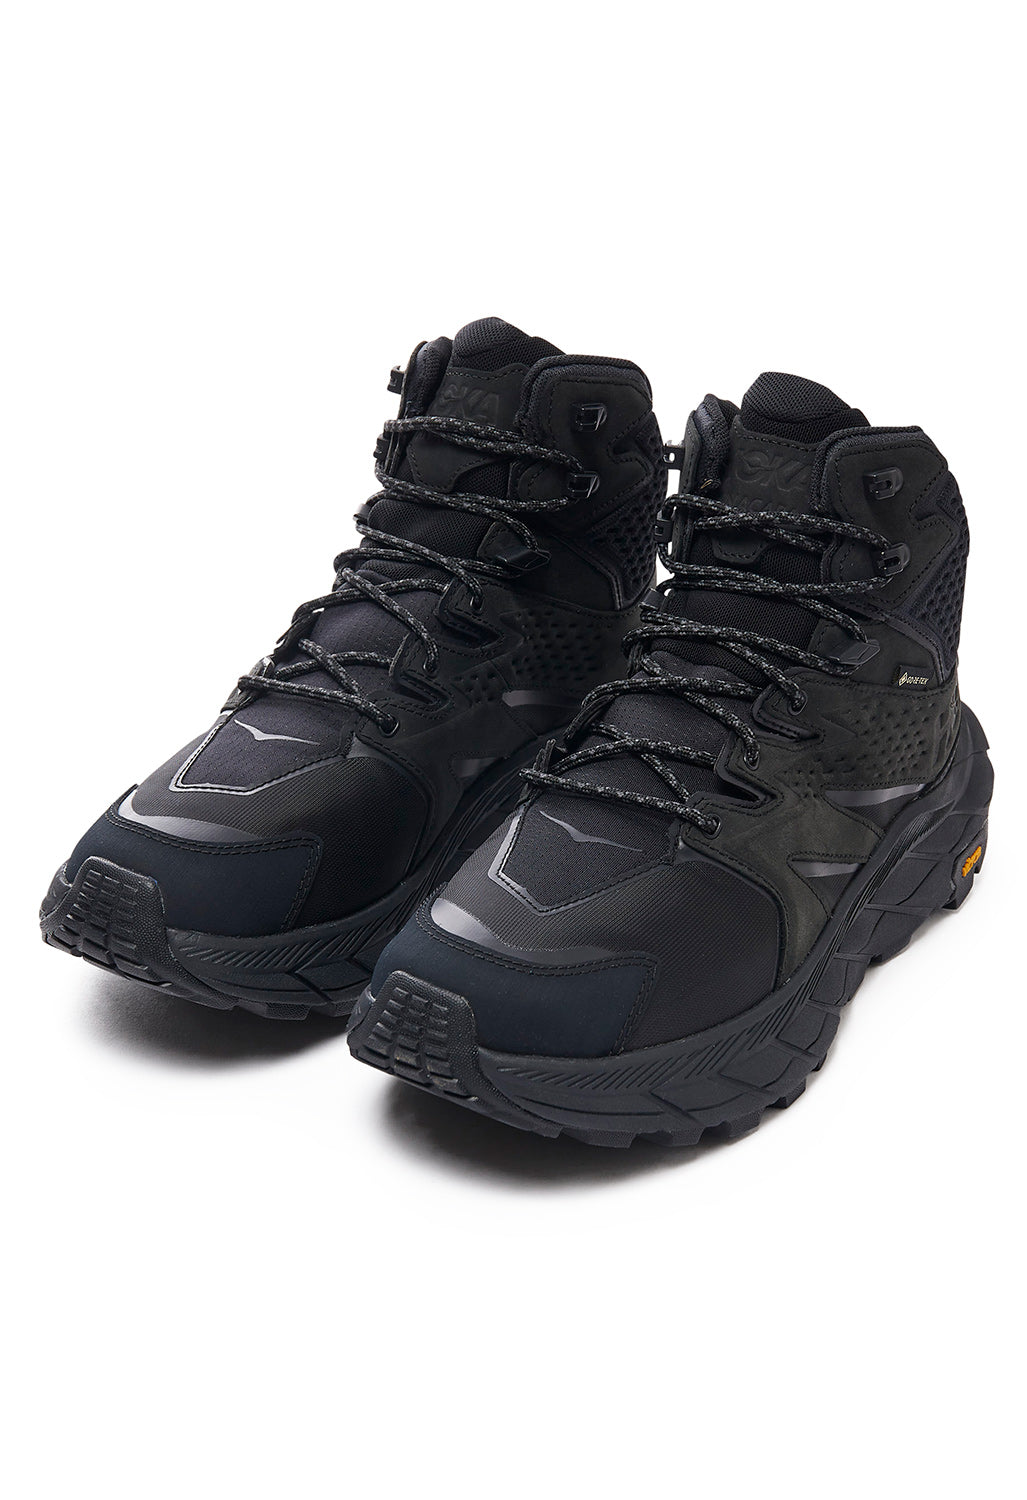 Hoka Anacapa Mid GORE-TEX Men's Boots - Black/Black